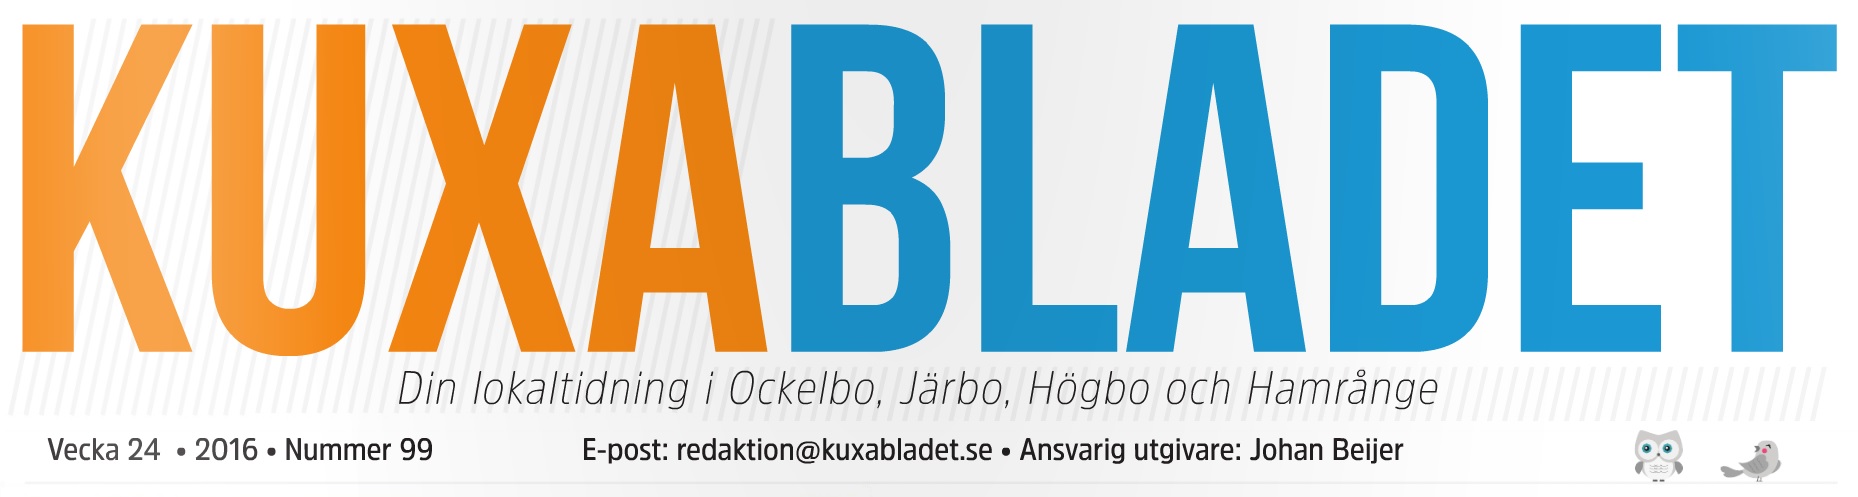 20160615-kuxabladet-logga